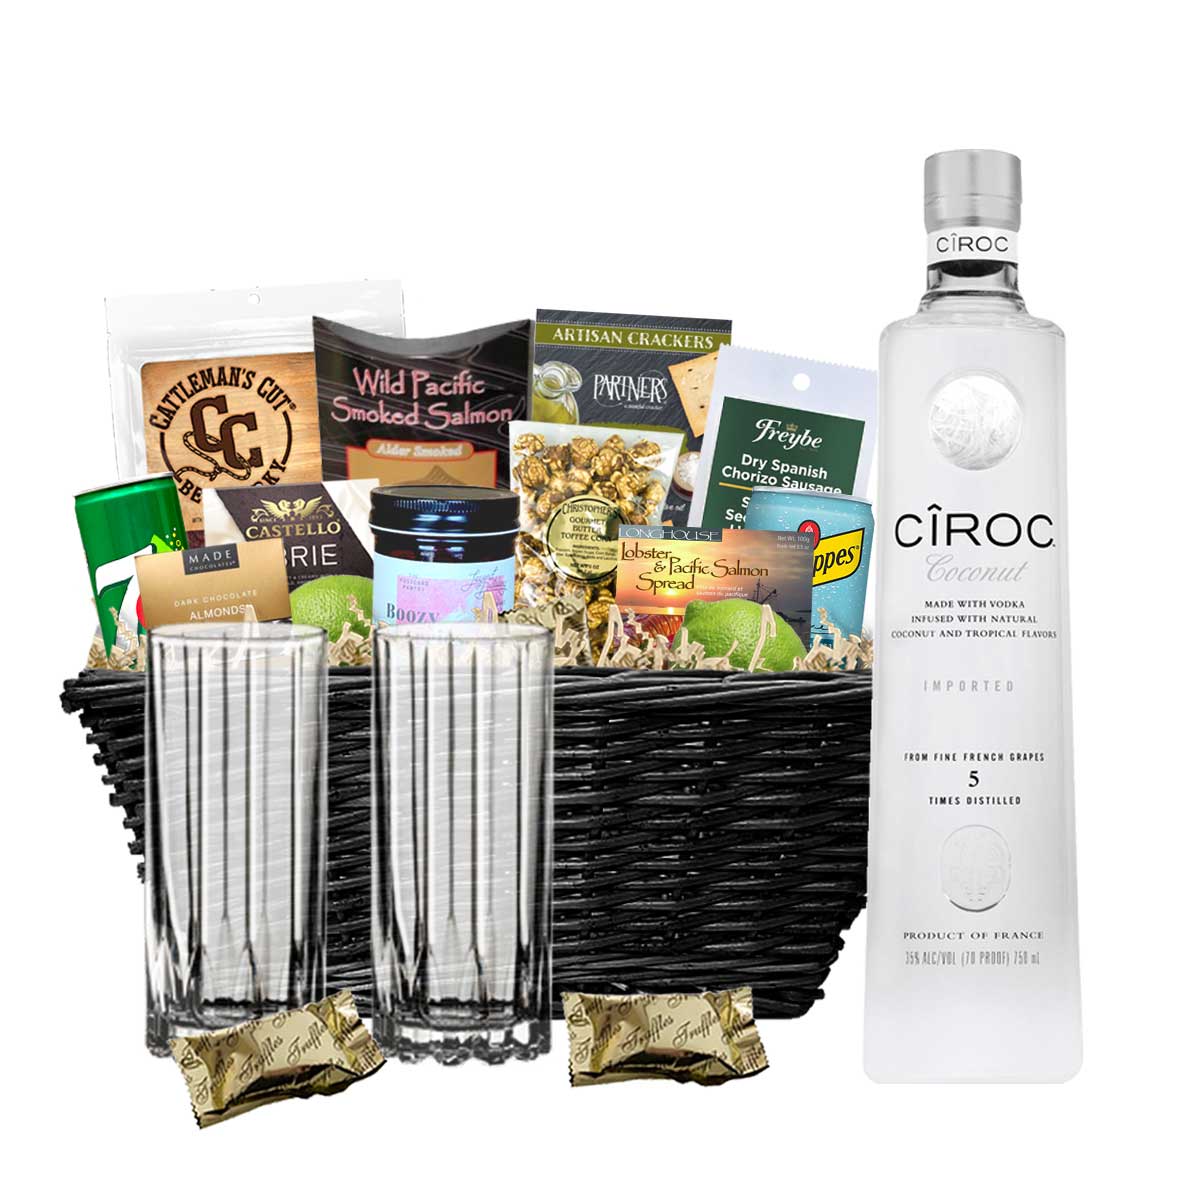 TAG Liquor Stores BC - Ciroc Coconut Vodka 750ml Gift Basket